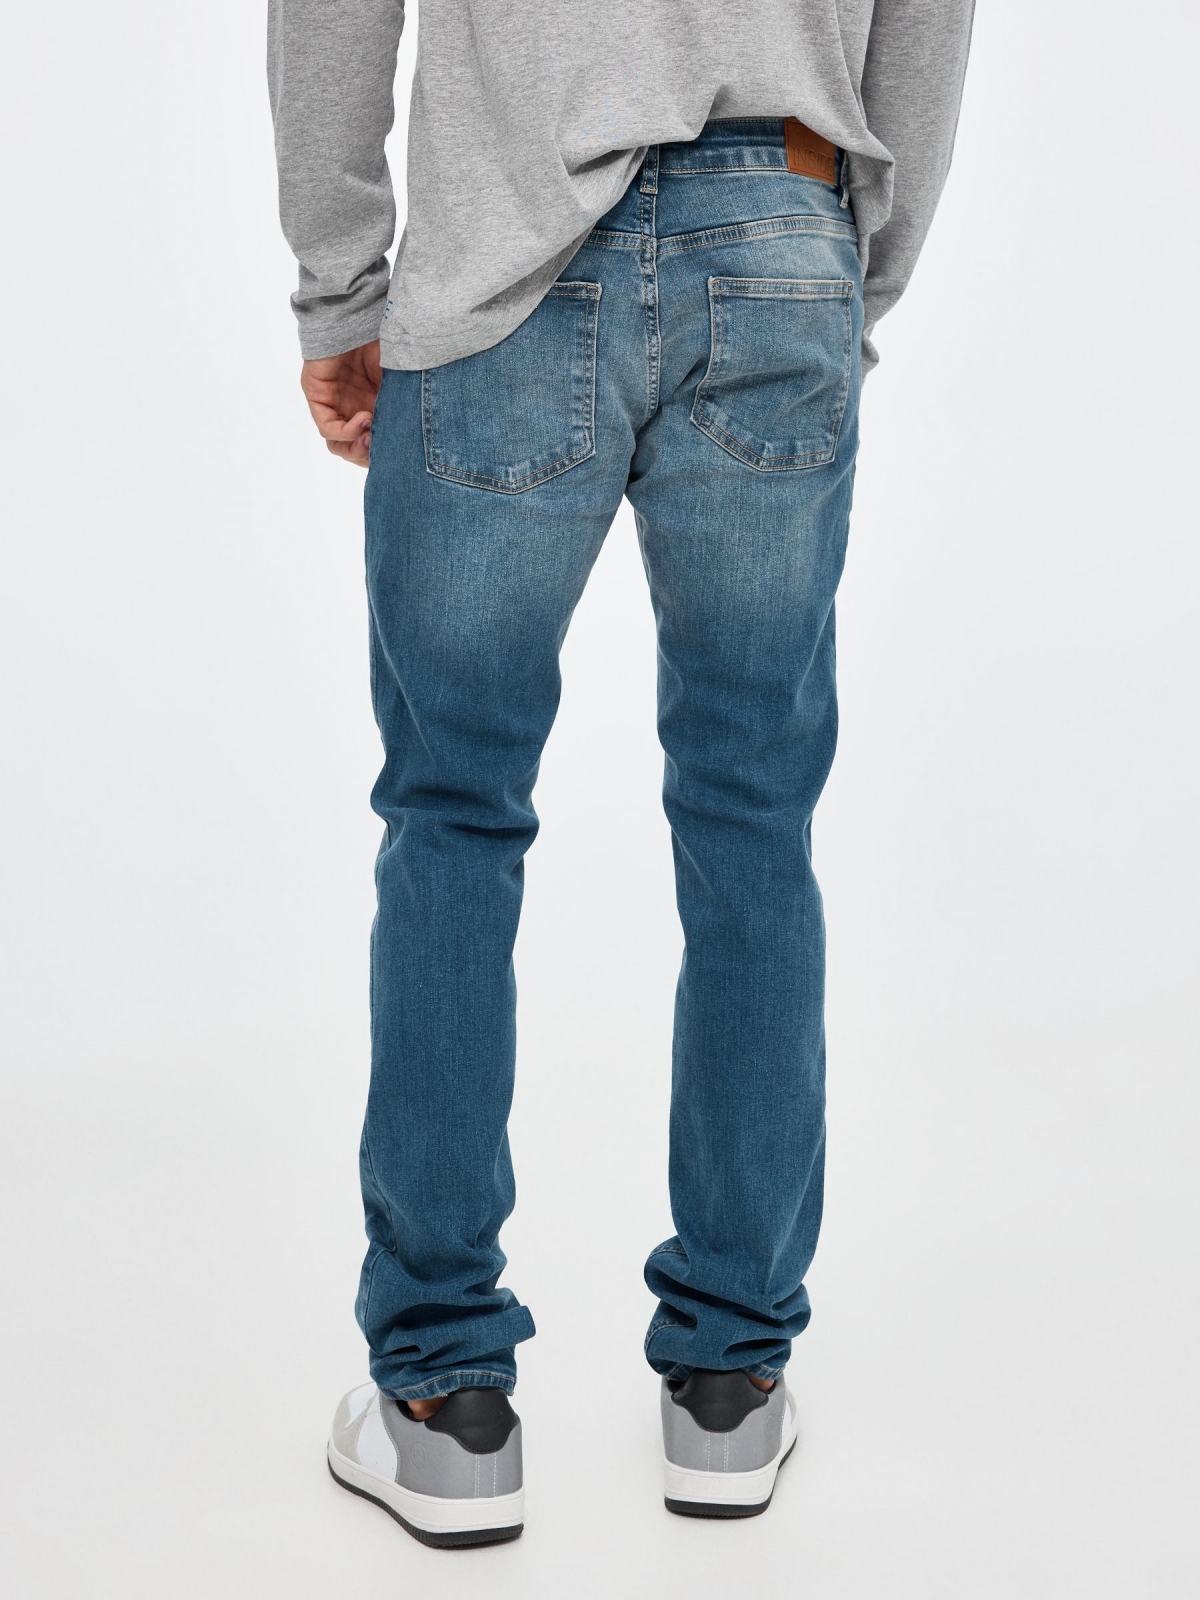 Regular jeans blue middle back view